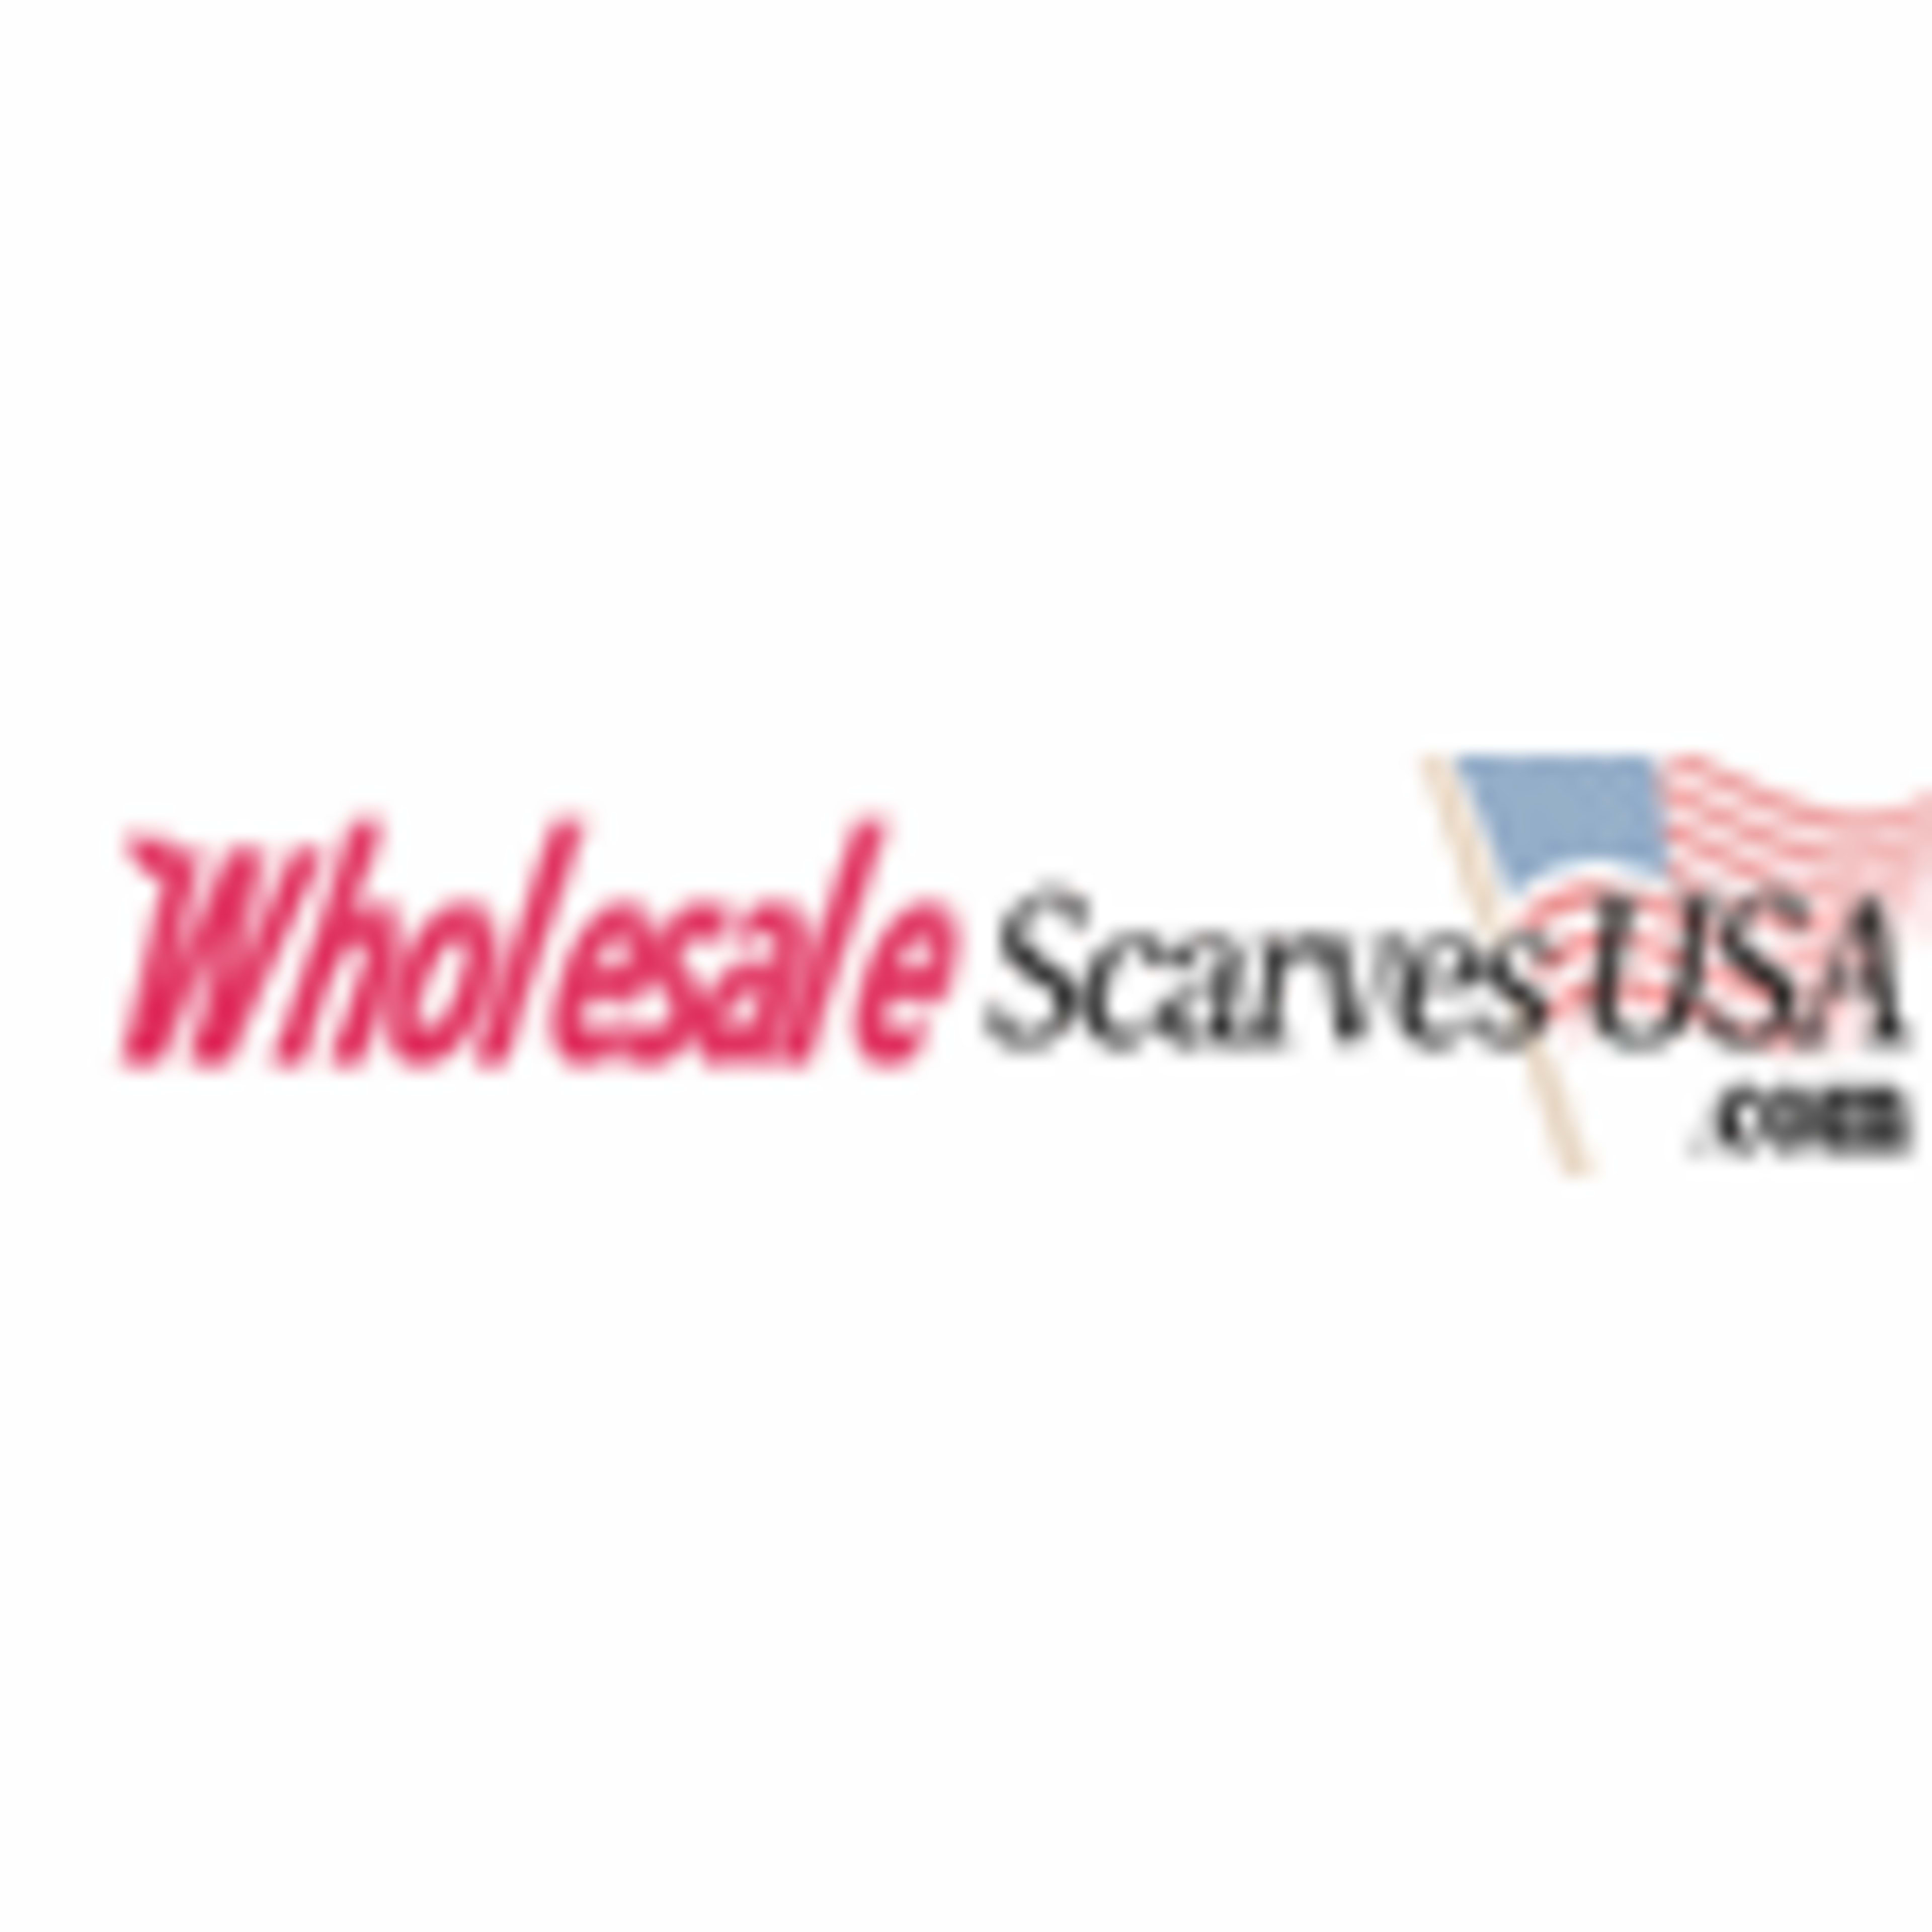 Wholesale Scarves USACode